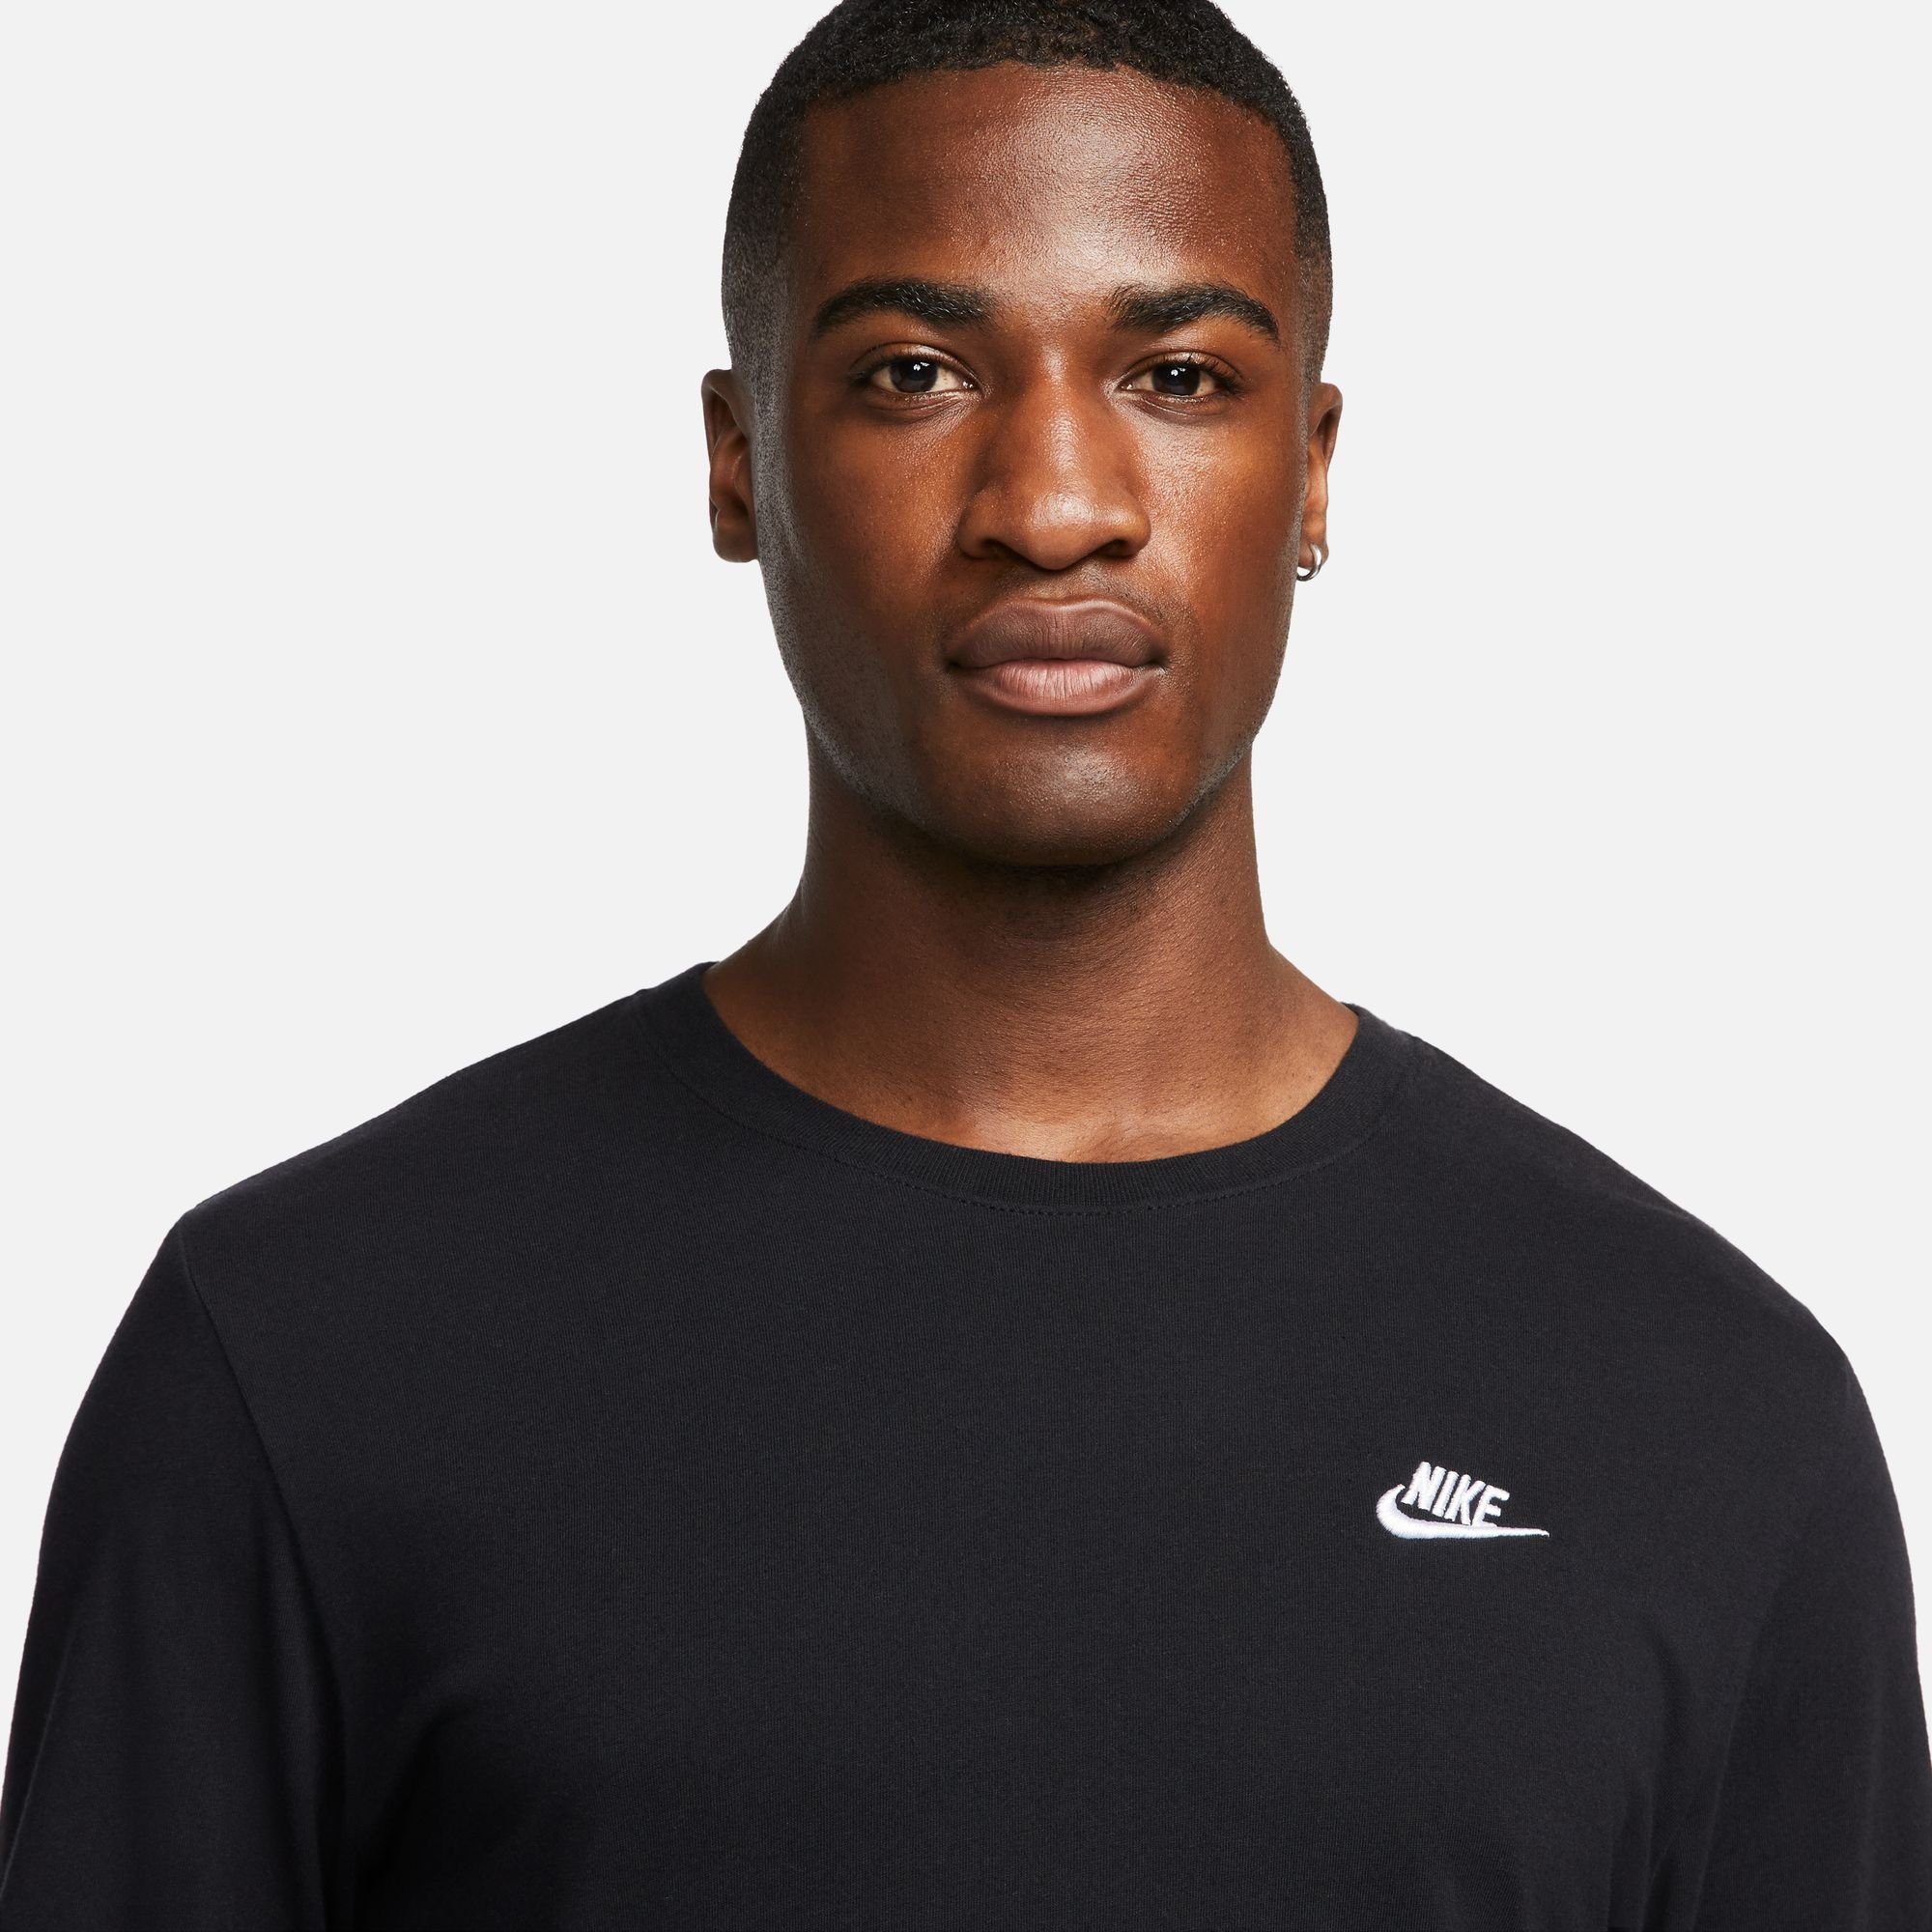 LONG-SLEEVE Nike schwarz T-SHIRT Sportswear MEN'S Langarmshirt